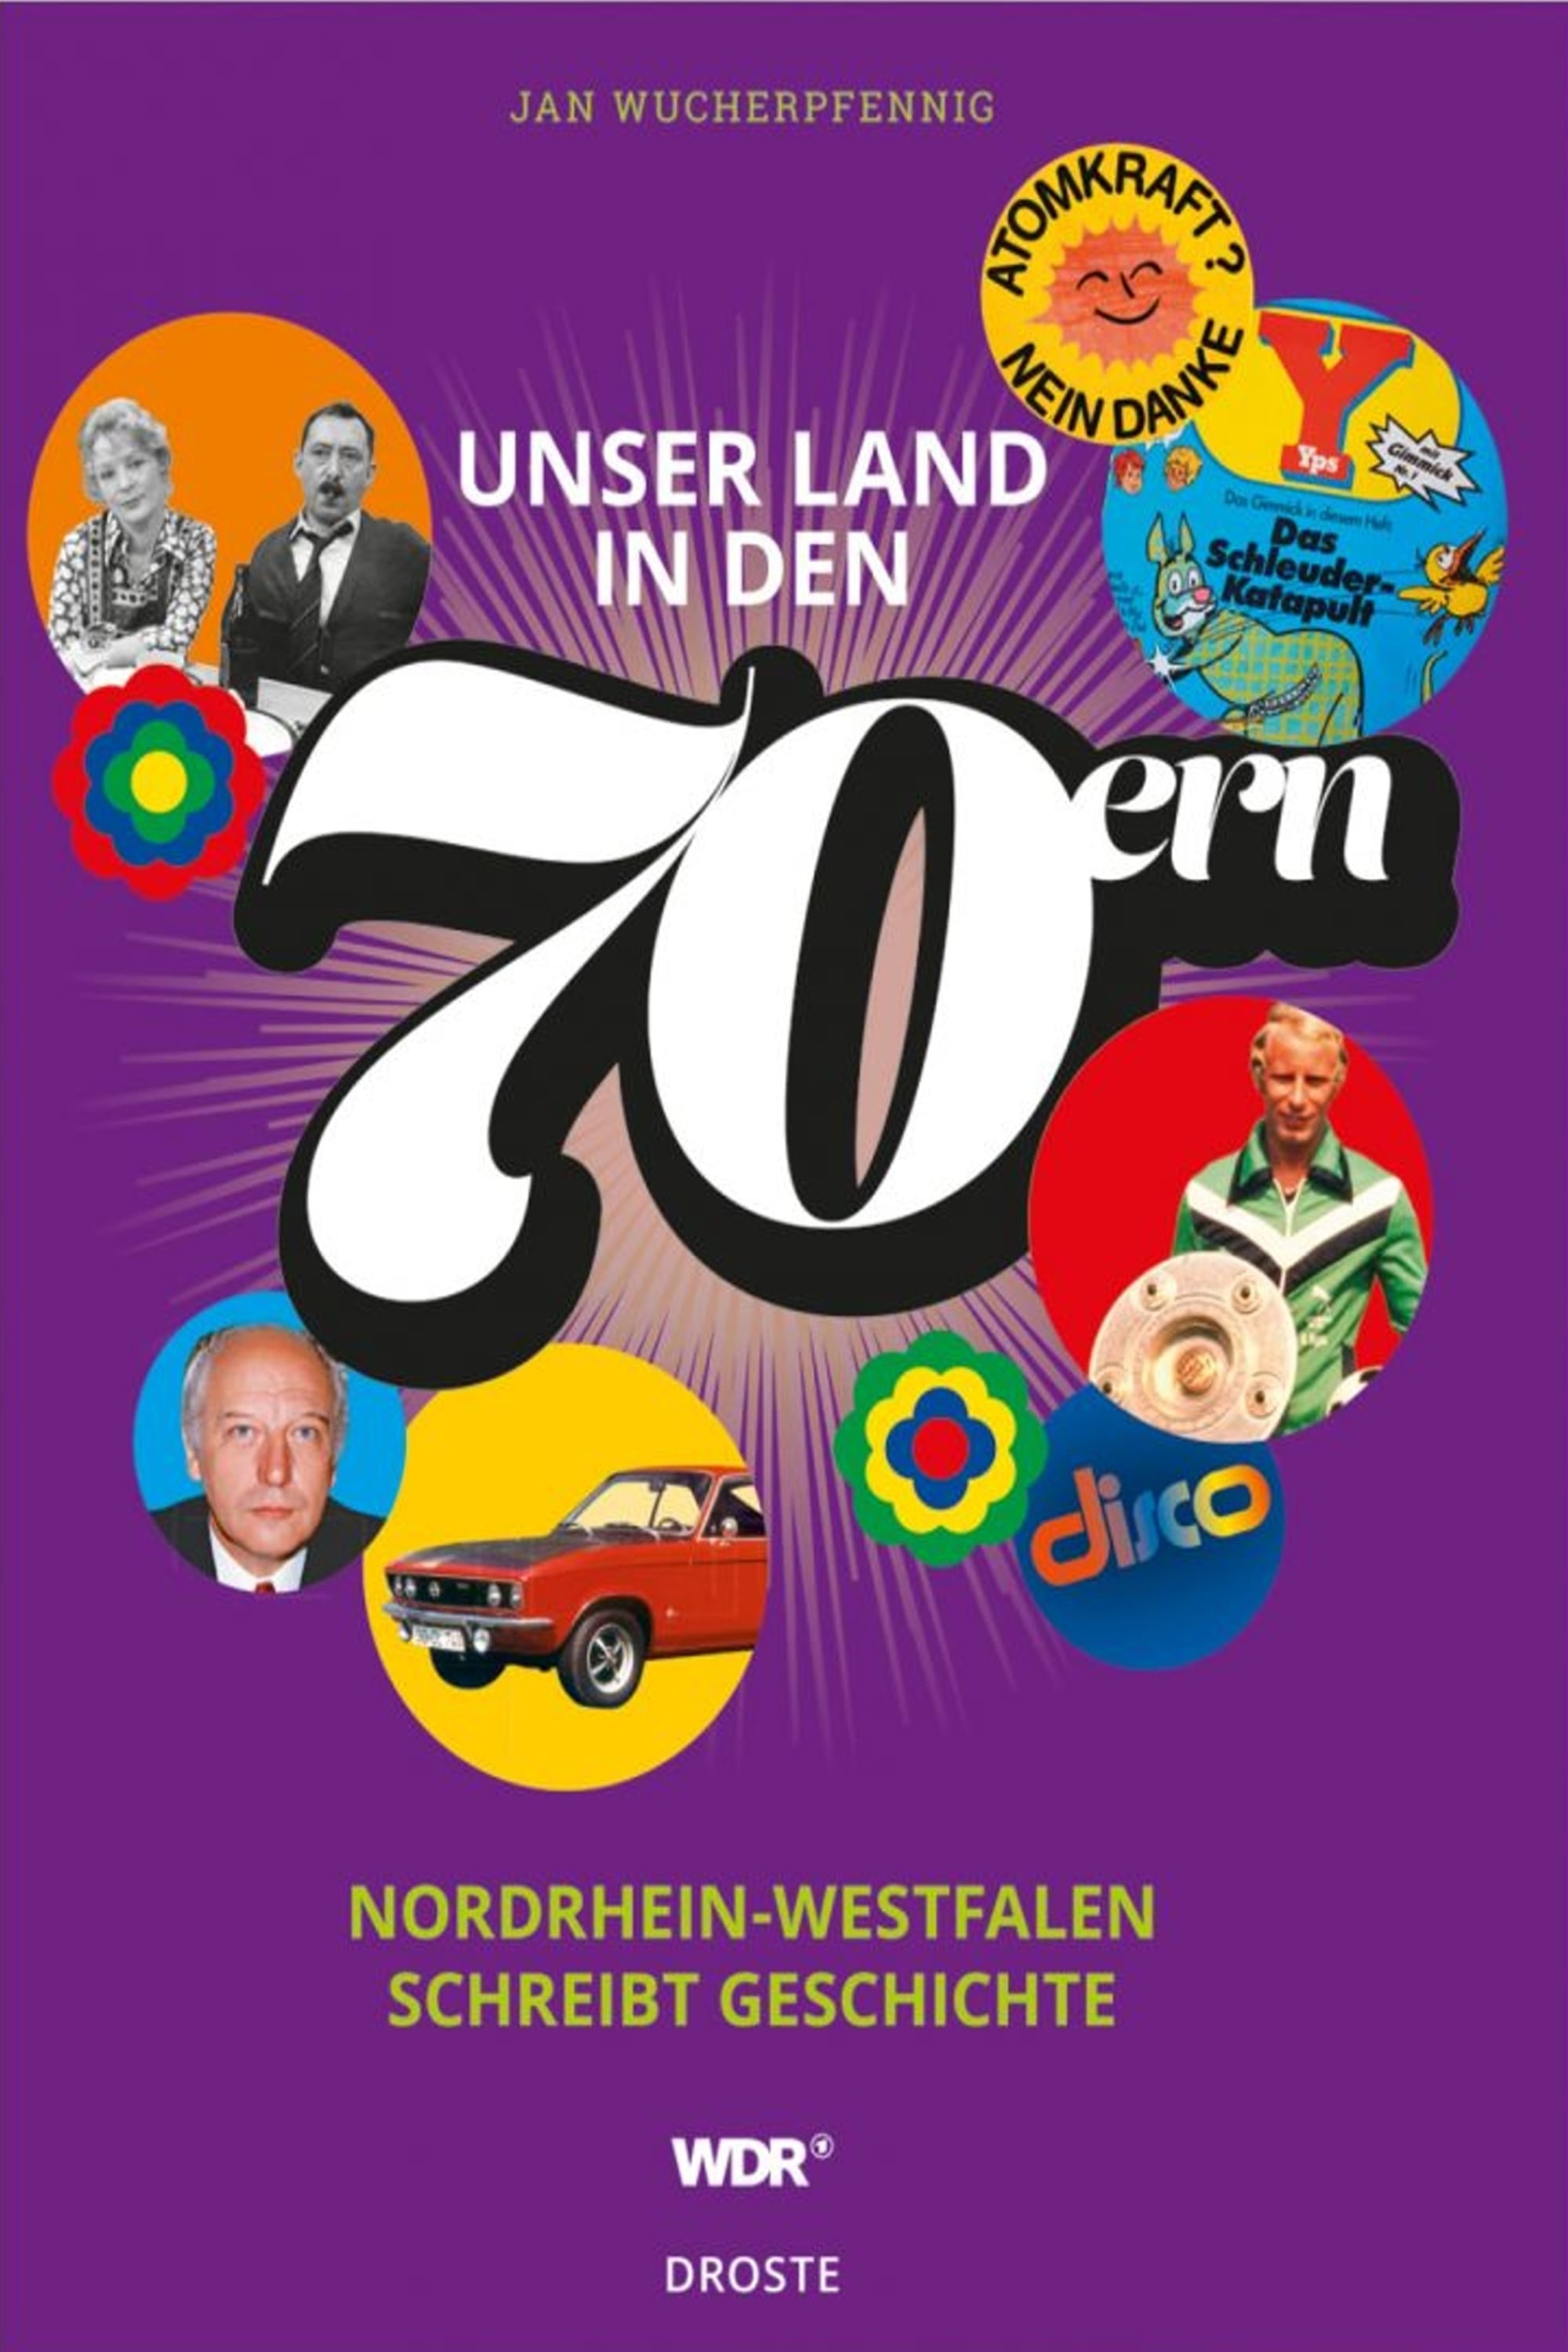 Unser Land in den 70ern (2017) | The Poster Database (TPDb)